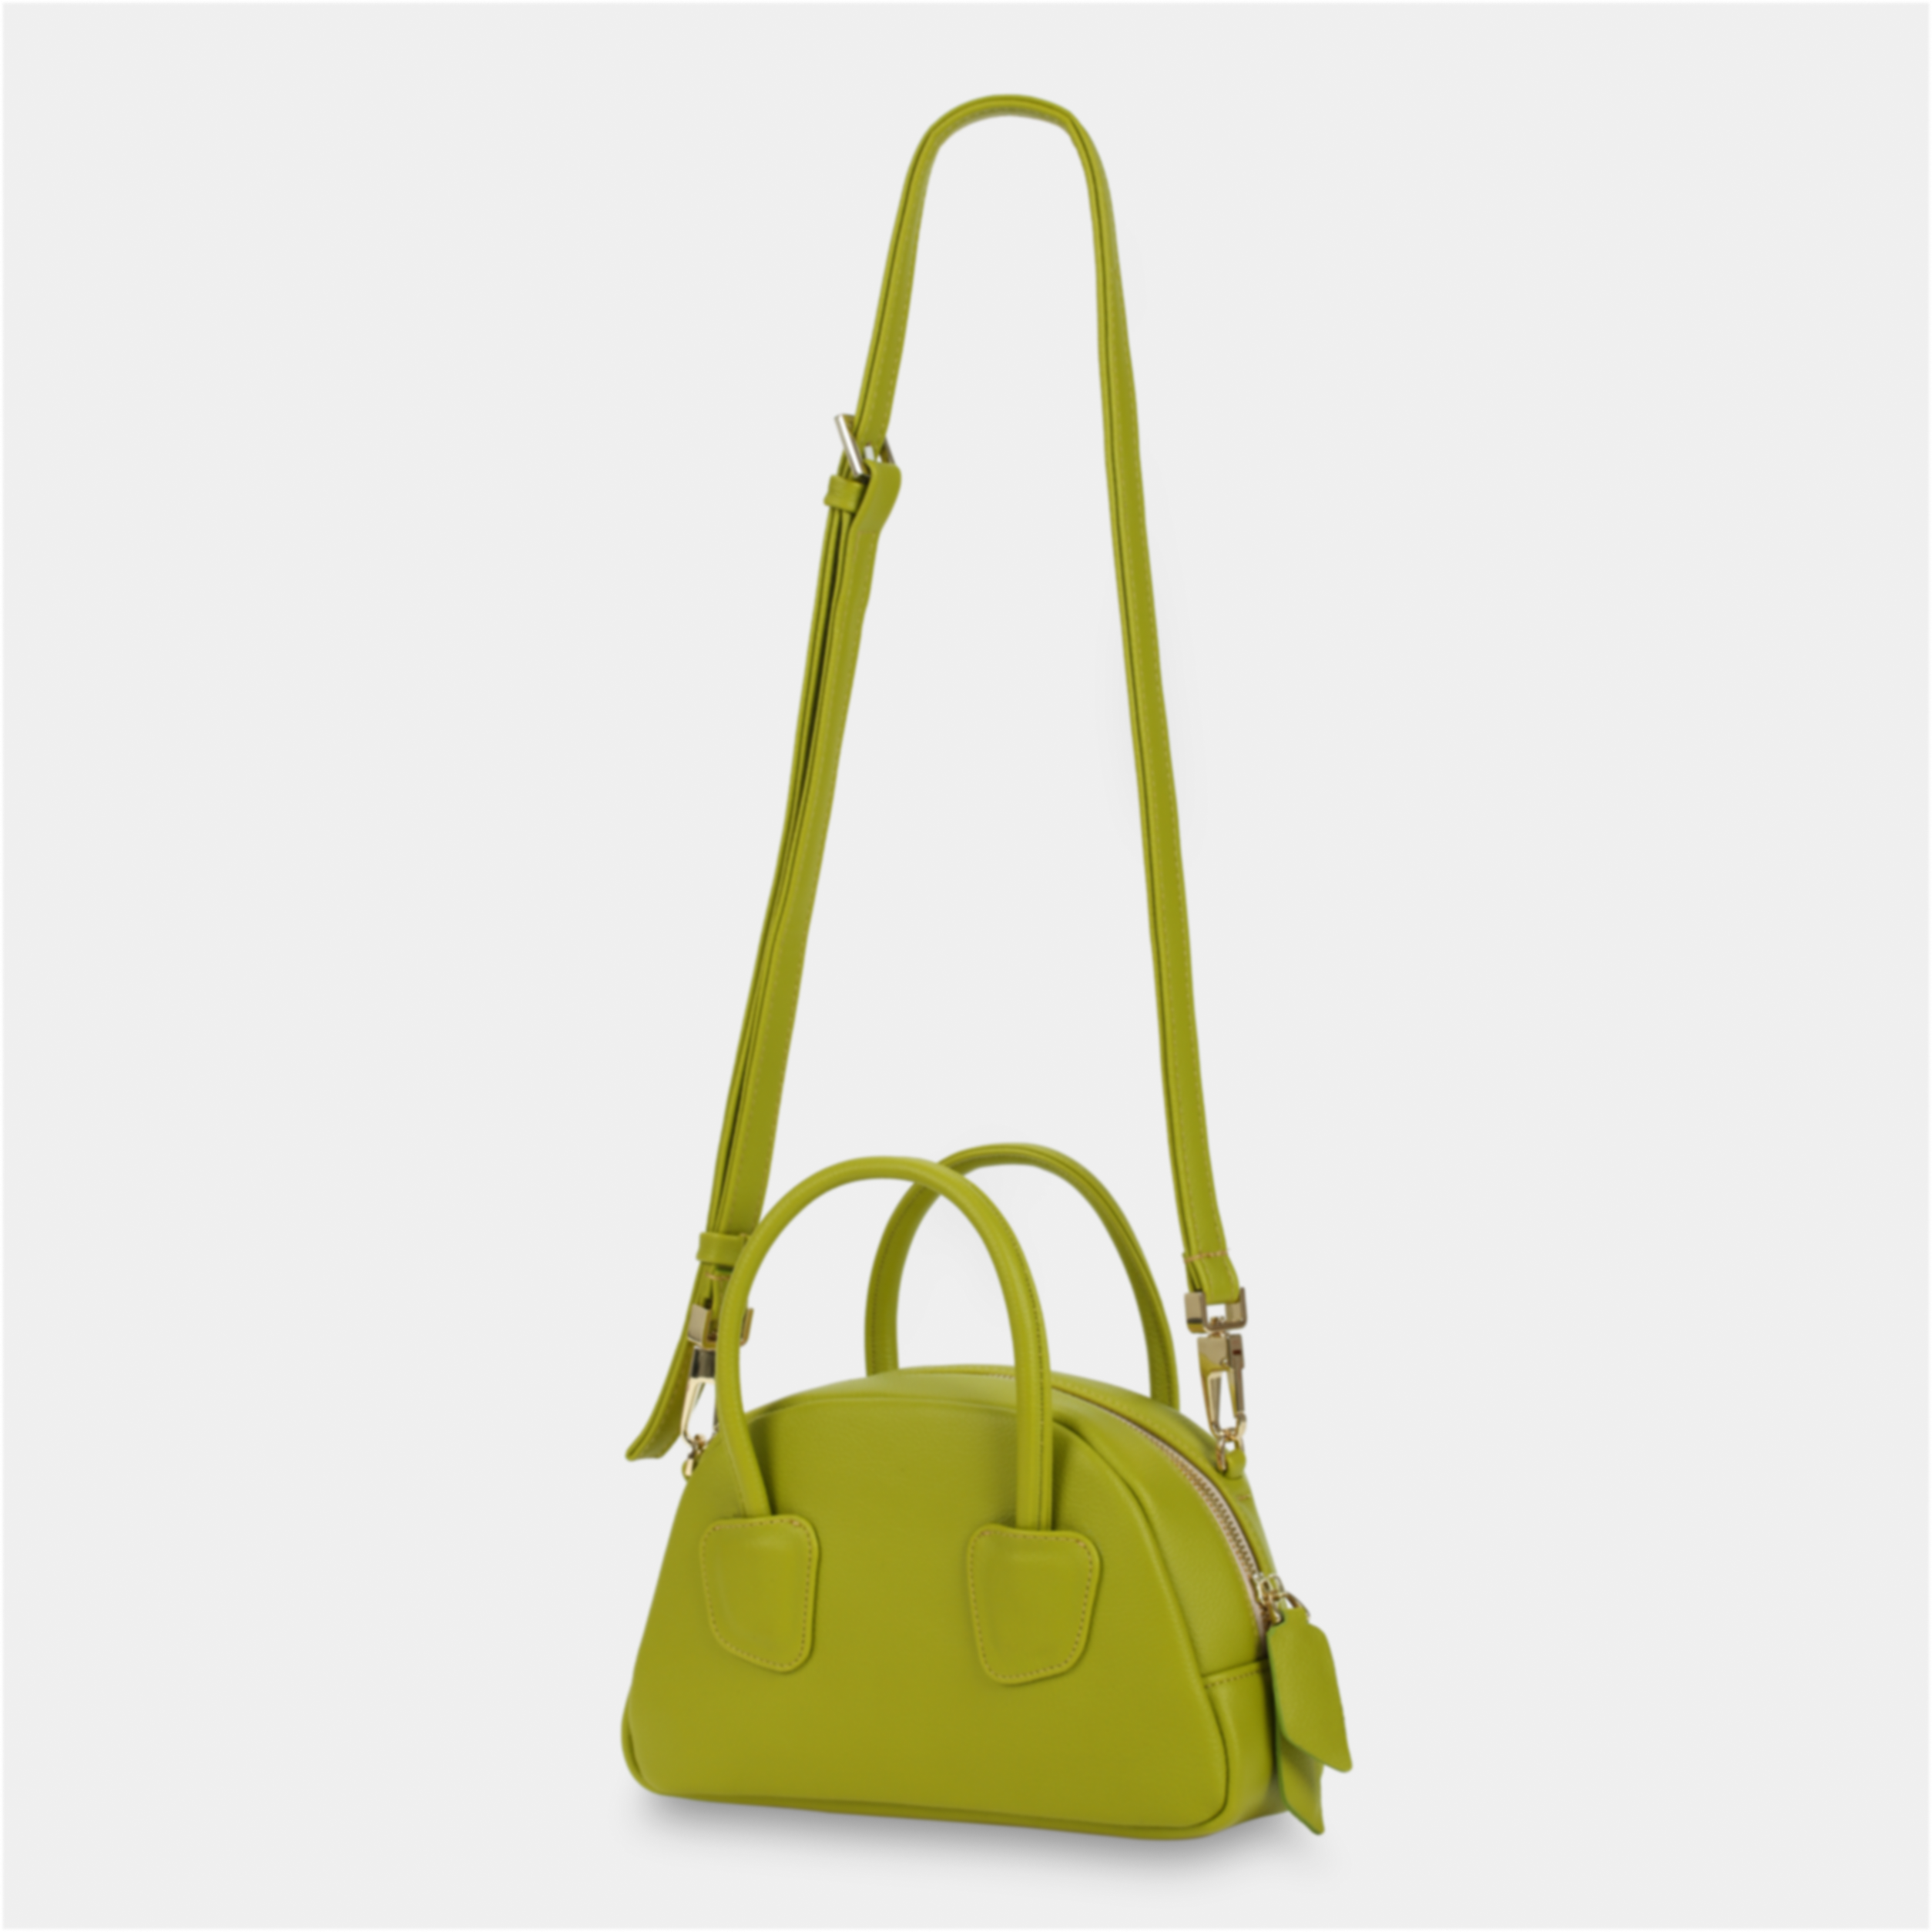 TACOS handbag in avocado green large size (M)